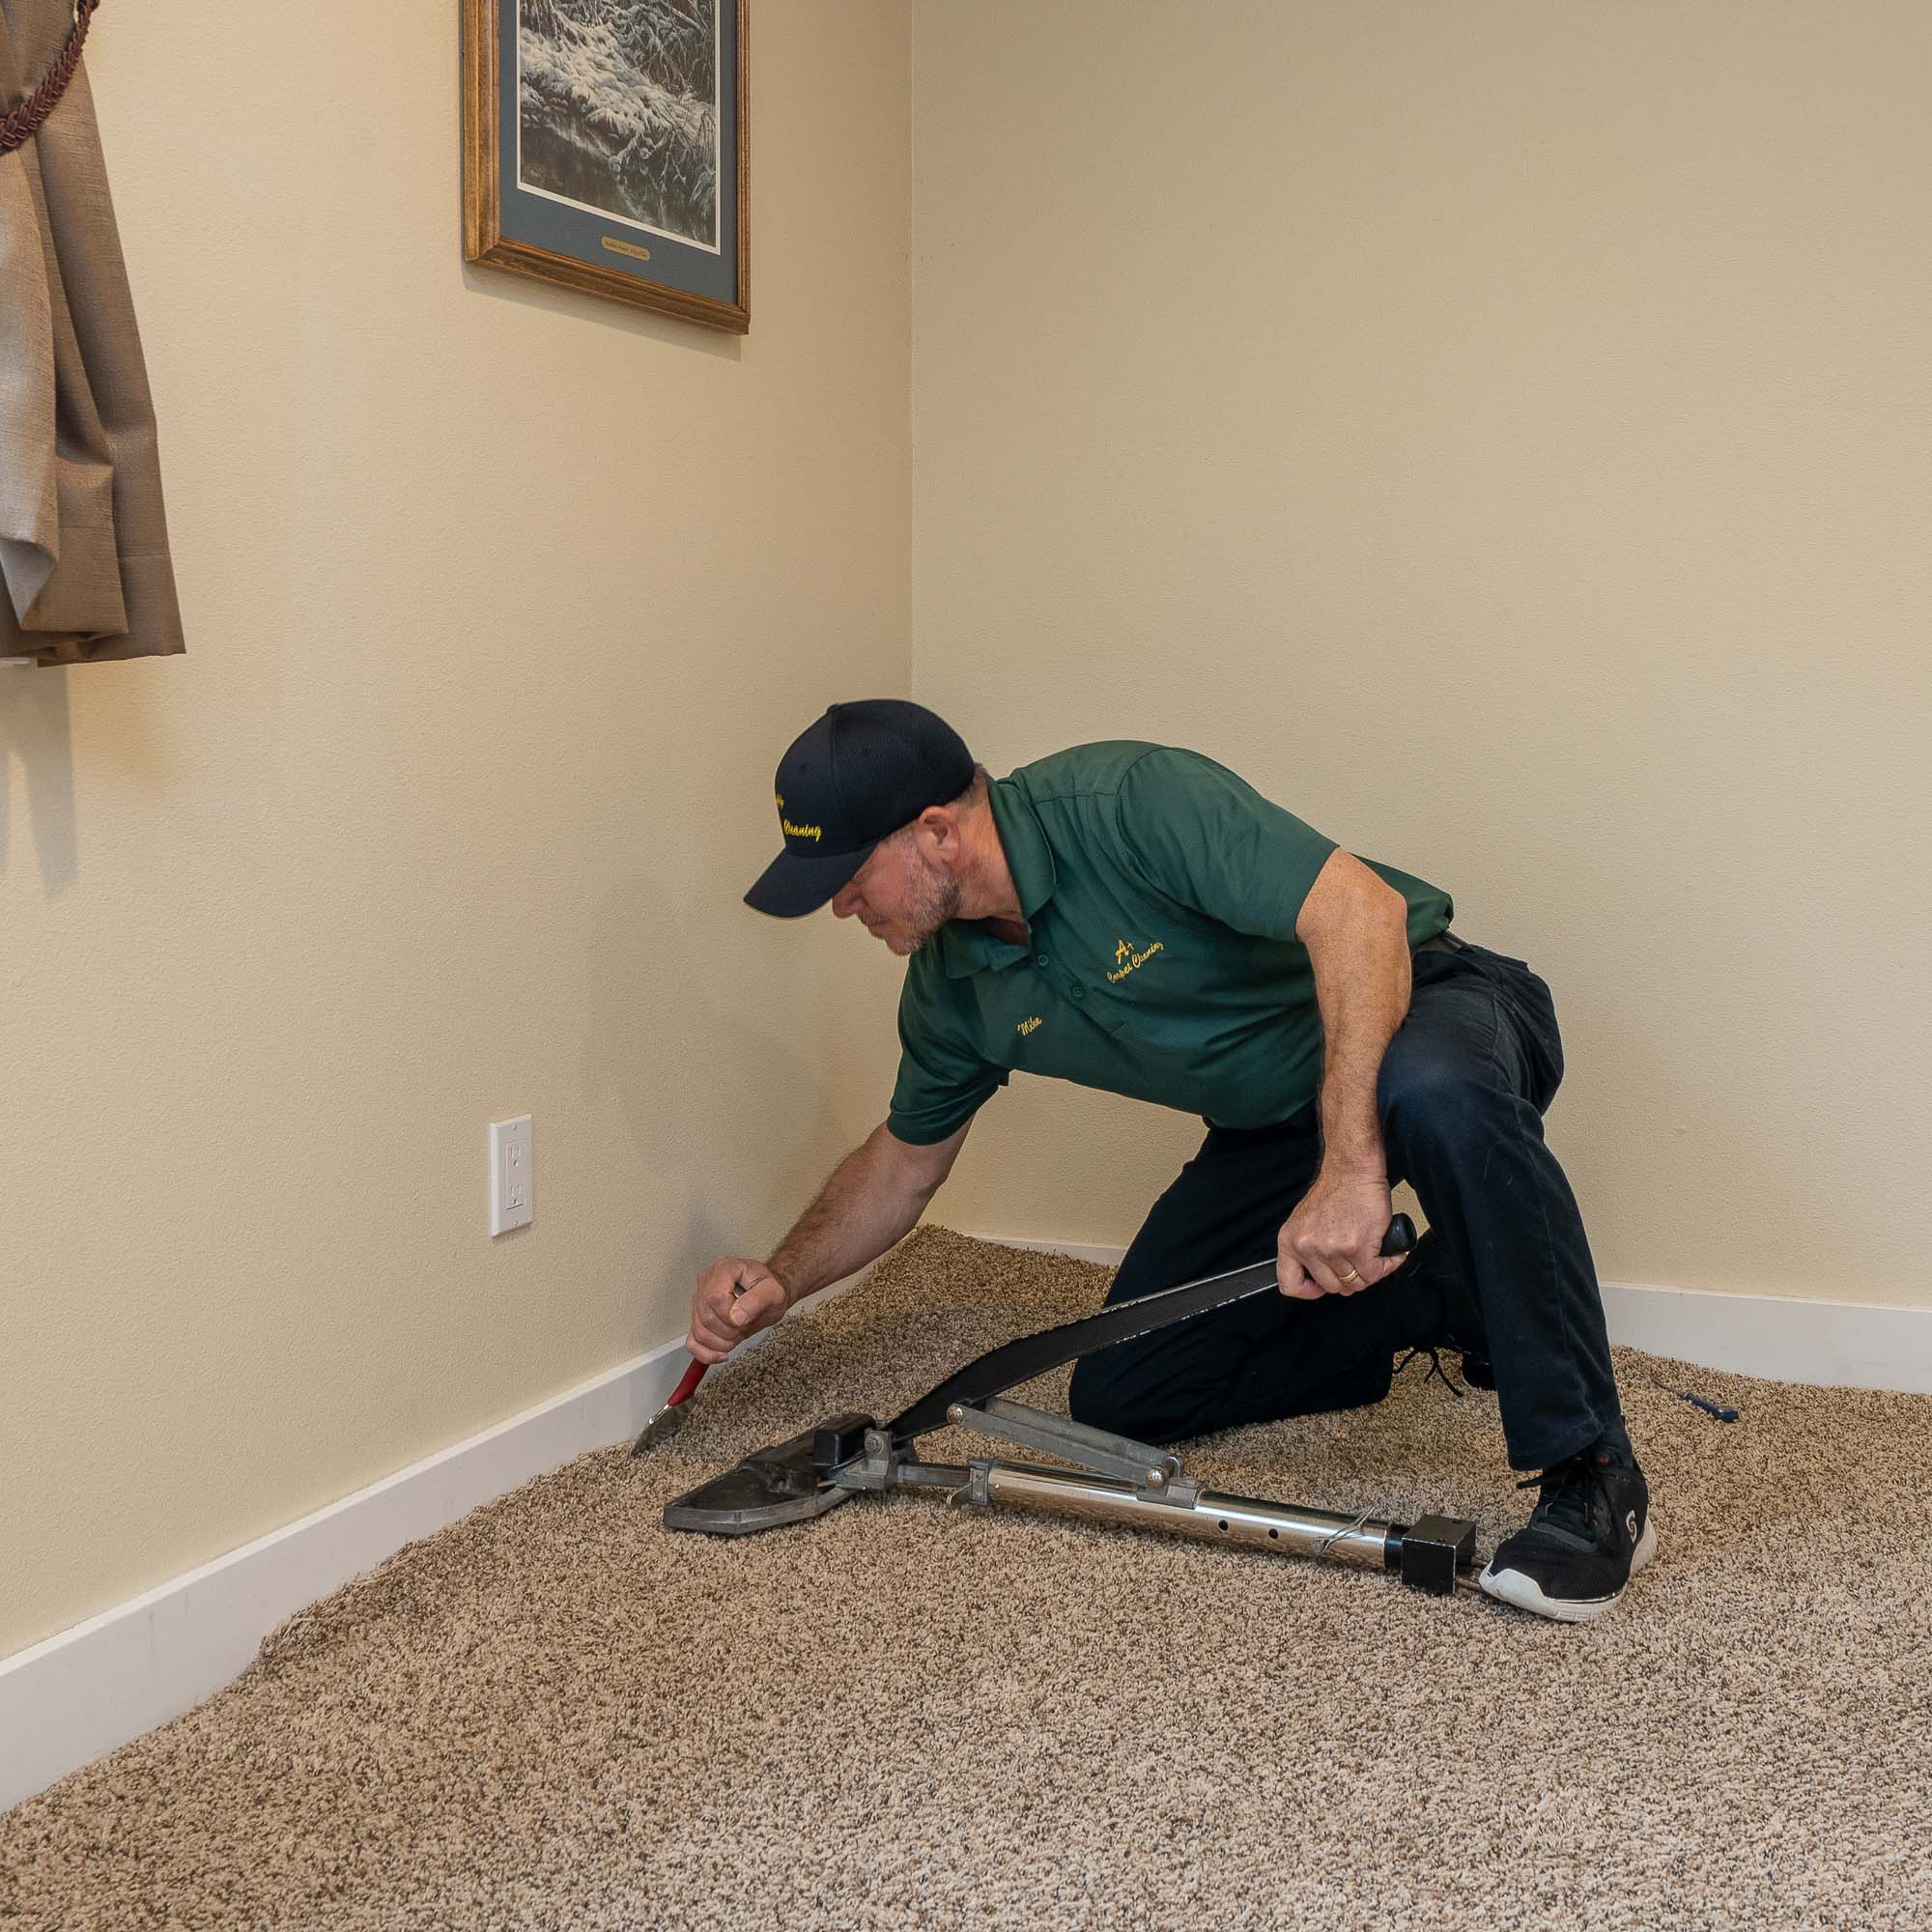 Carpet Repair and Restretching in Portland, Hillsoro, Beaverton, West Linn, Tigard, Lake Oswego, Tualatin